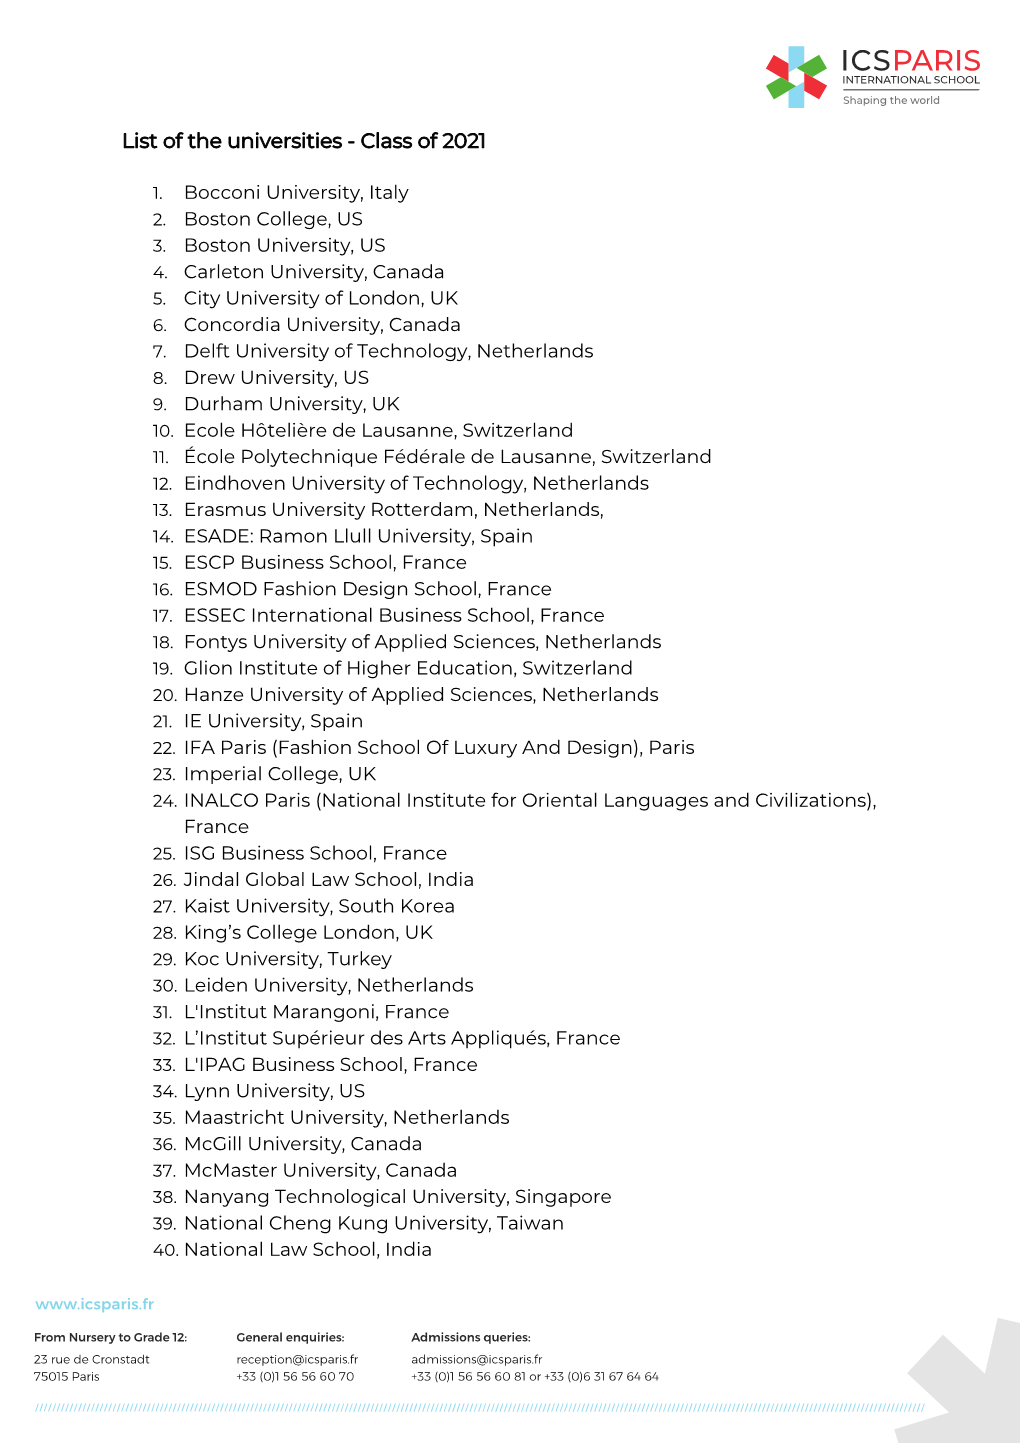 List of the Universities - Class of 2021